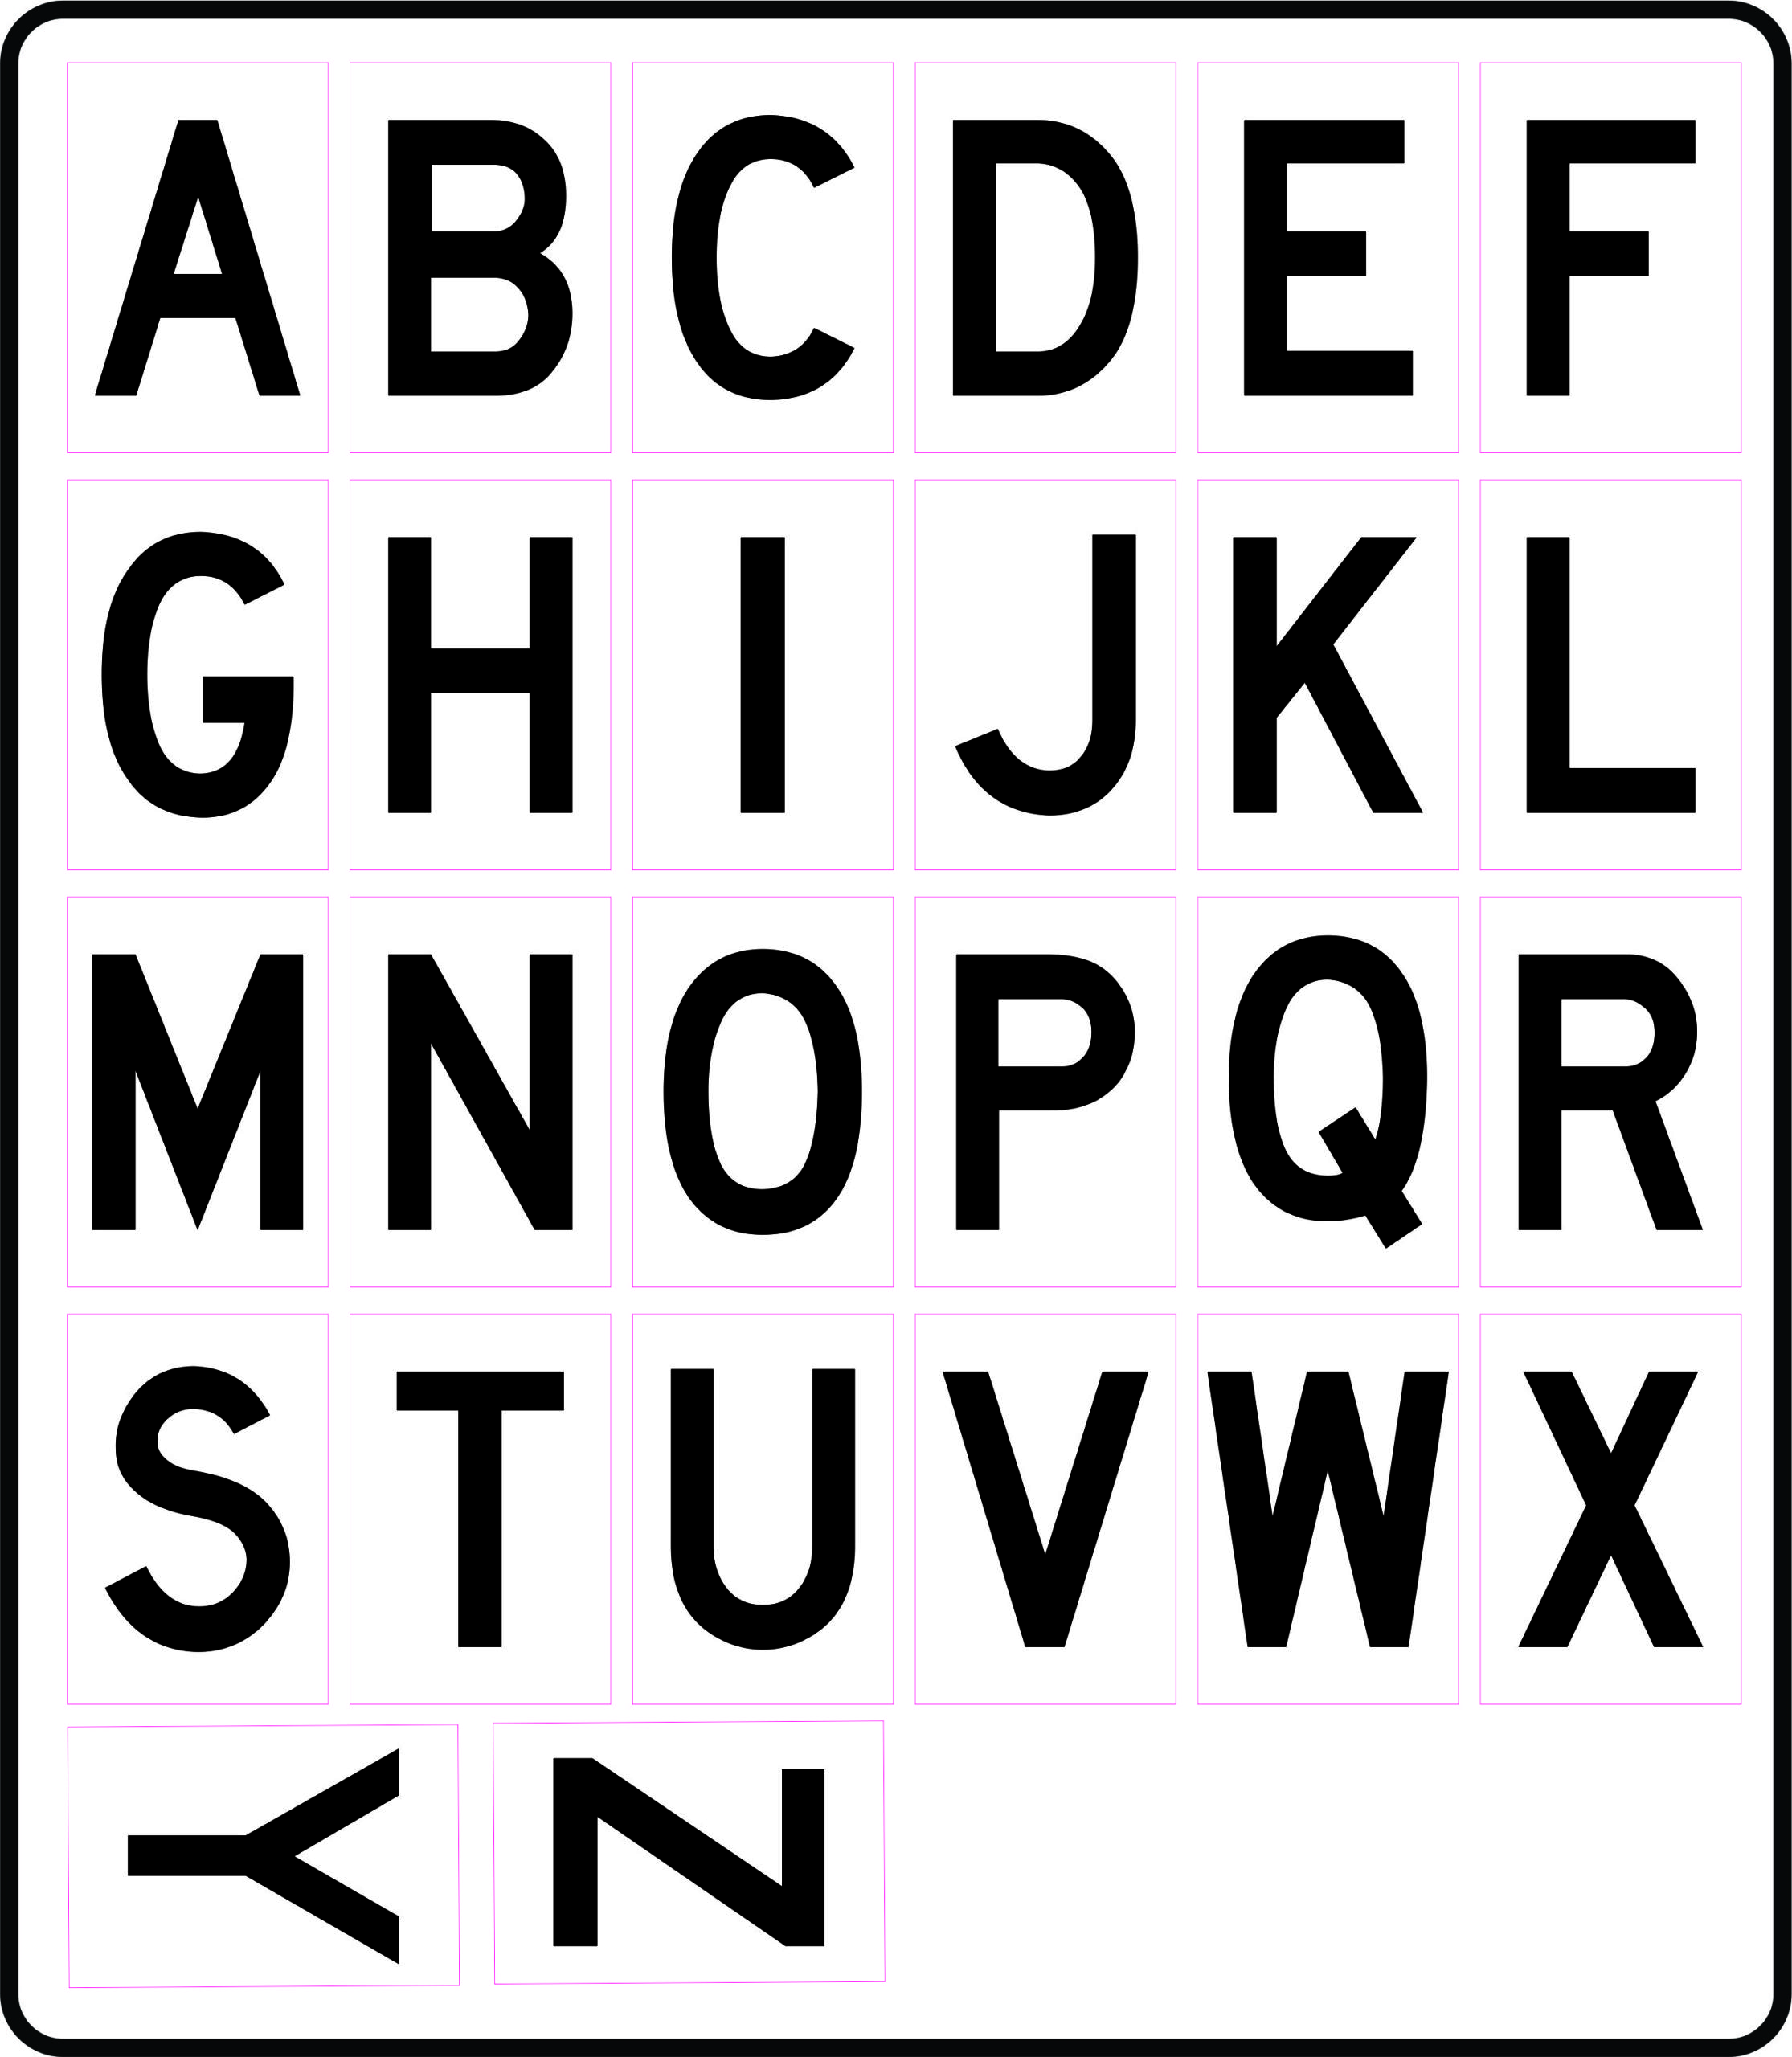 StickerTalk Alphabet Letter Vinyl Stickers, 1.25 Inches by 1.75 Inches